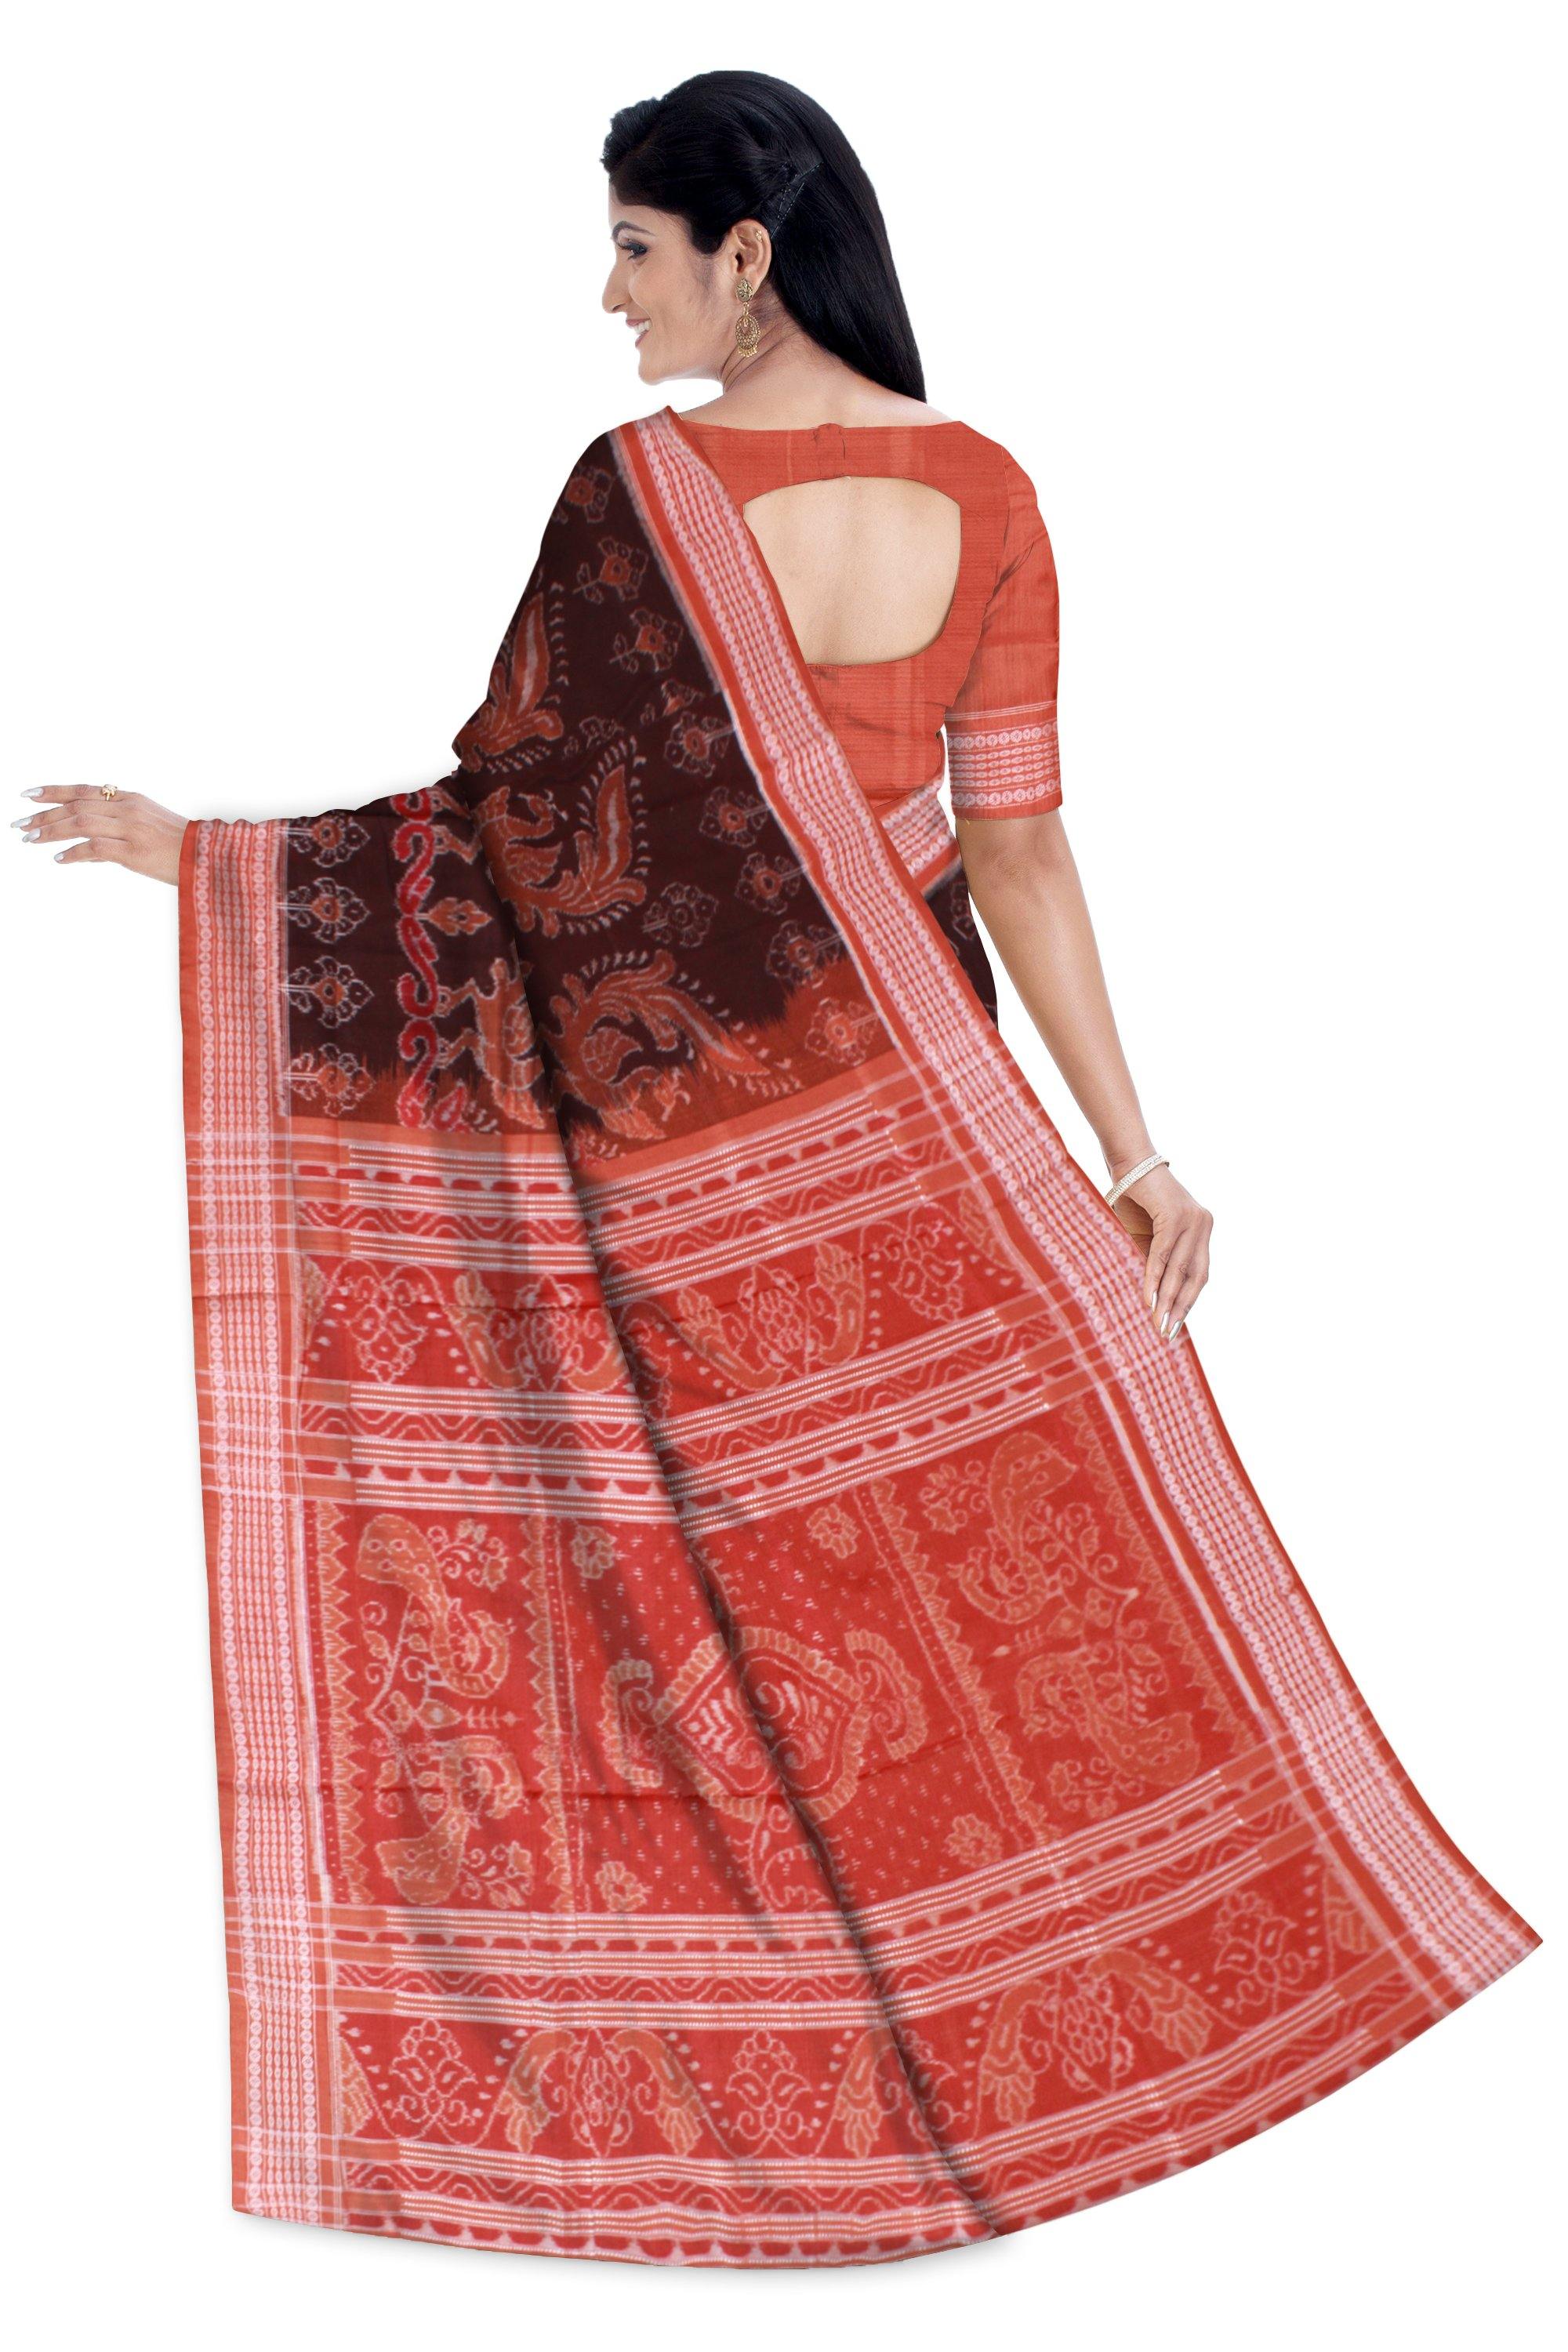 3D Mayuri pattern Brown IKAT saree with Blouse piece - Koshali Arts & Crafts Enterprise